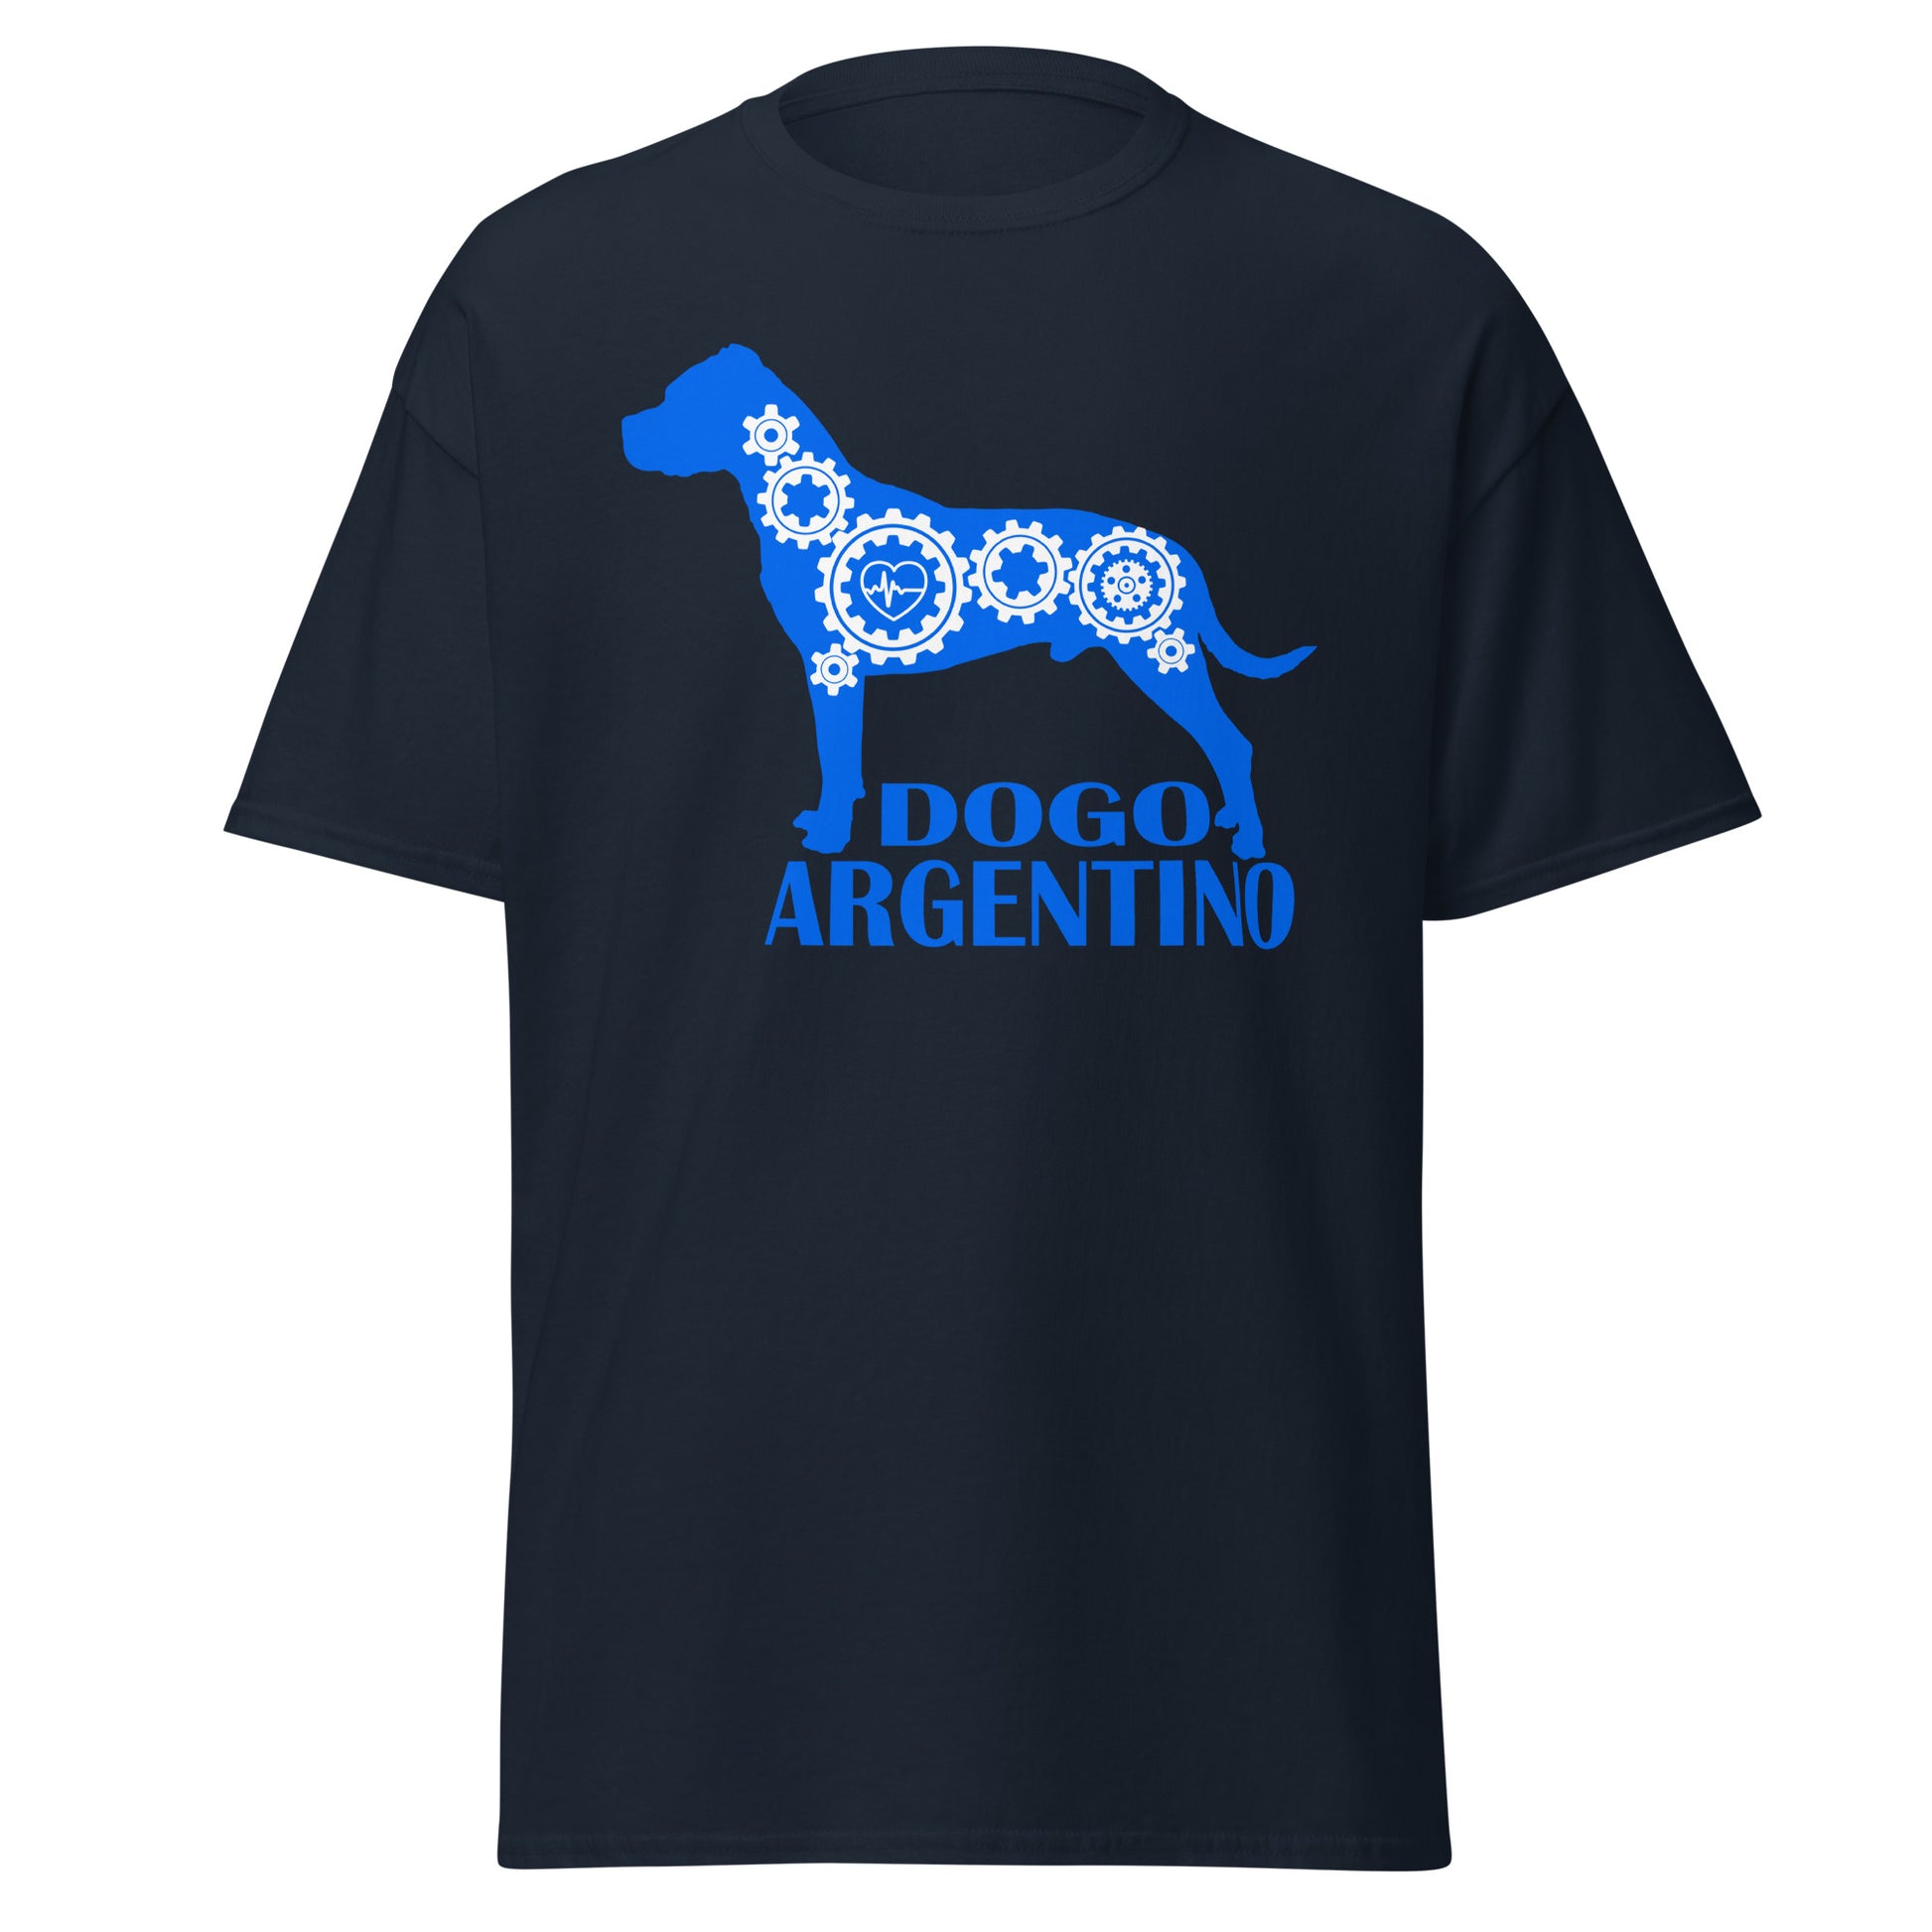 Dogo Argentino Bionic men’s navy t-shirt by Dog Artistry.